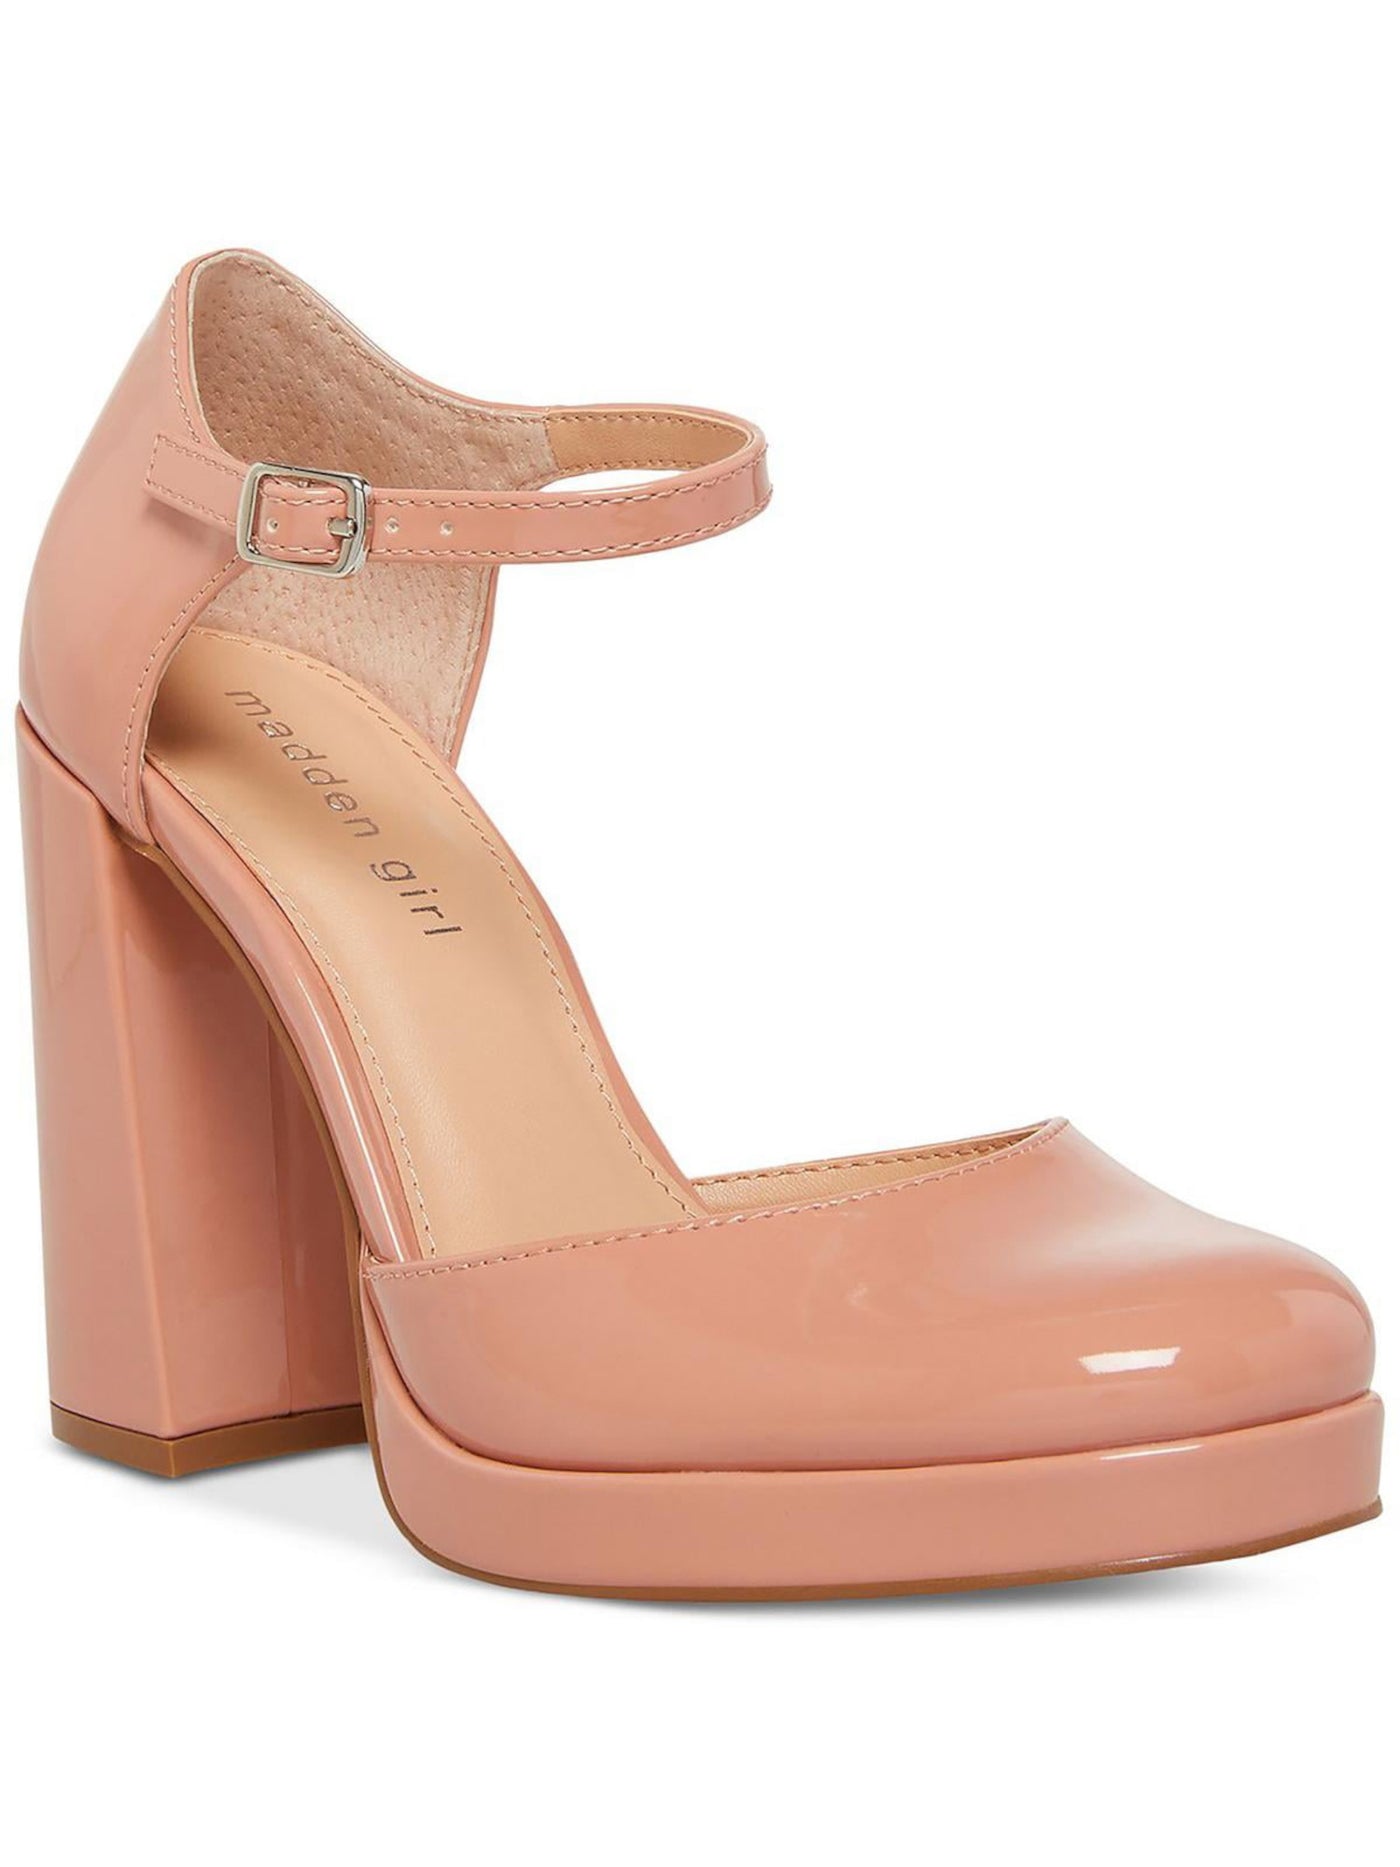 MADDEN GIRL Womens Pink Comfort Una Round Toe Block Heel Buckle Dress Pumps Shoes 10 M